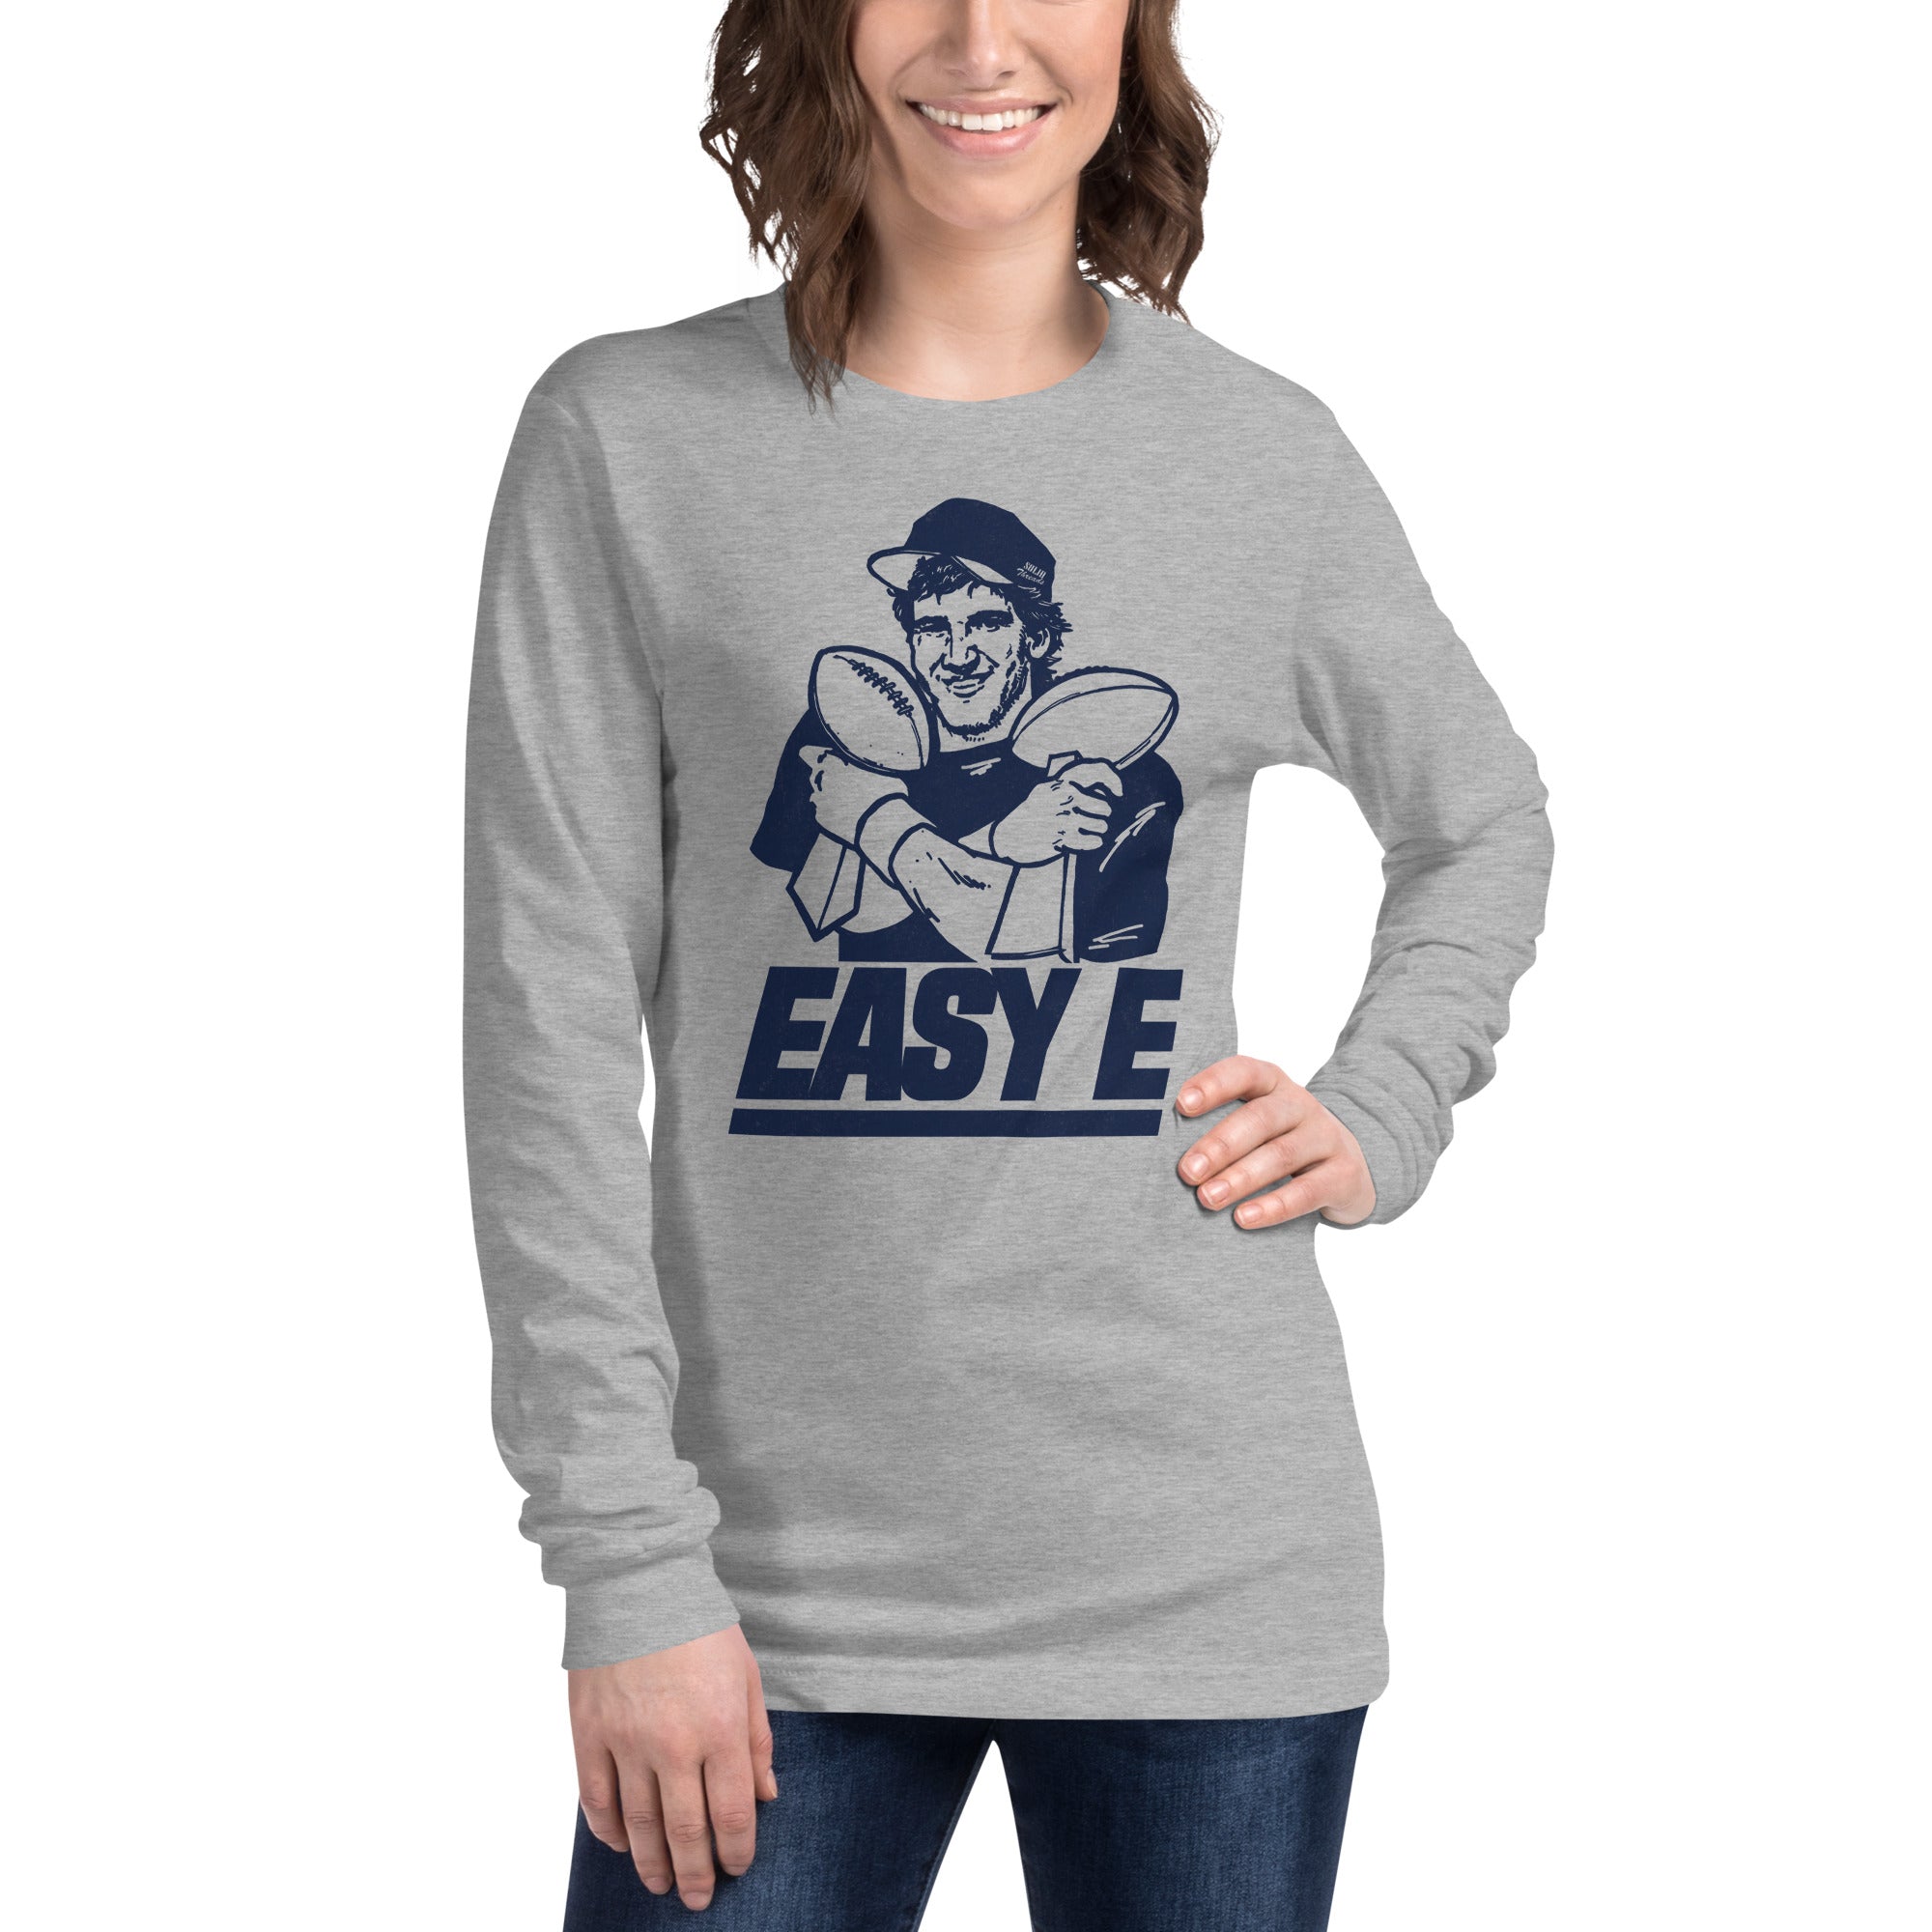 Easy E Retro Sports Shirt | Funny NY Giants Eli Manning Long Sleeve T-shirt on Model | SOLID THREADS